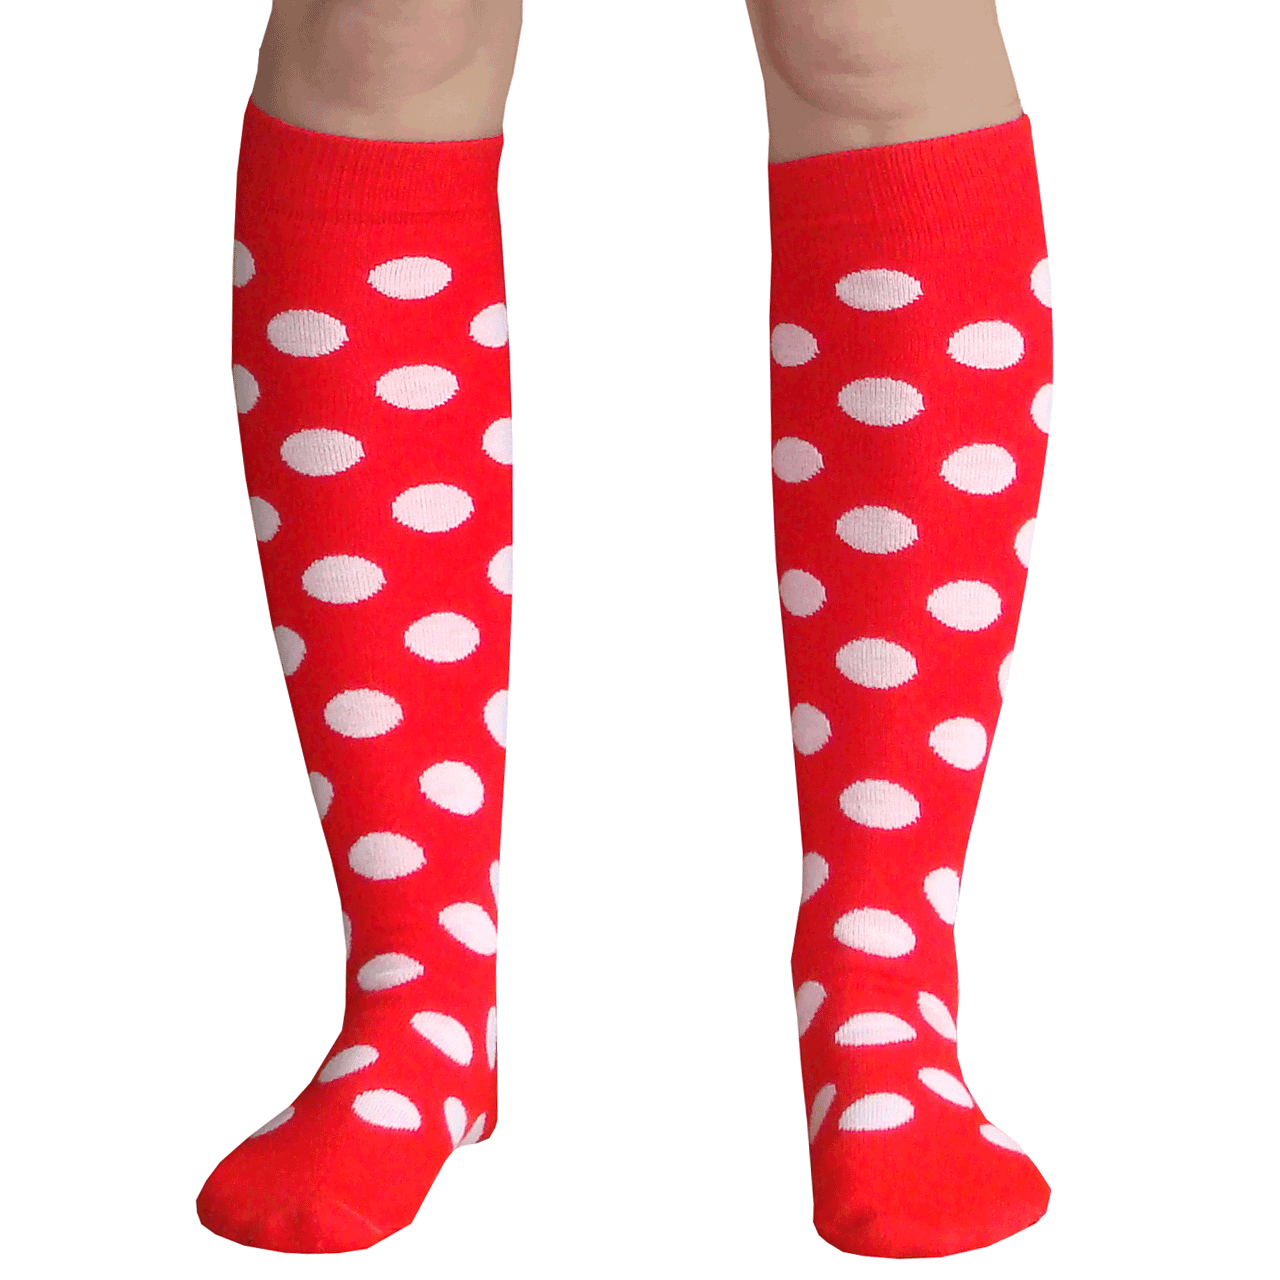 Red Polka Dot Socks with White Spots